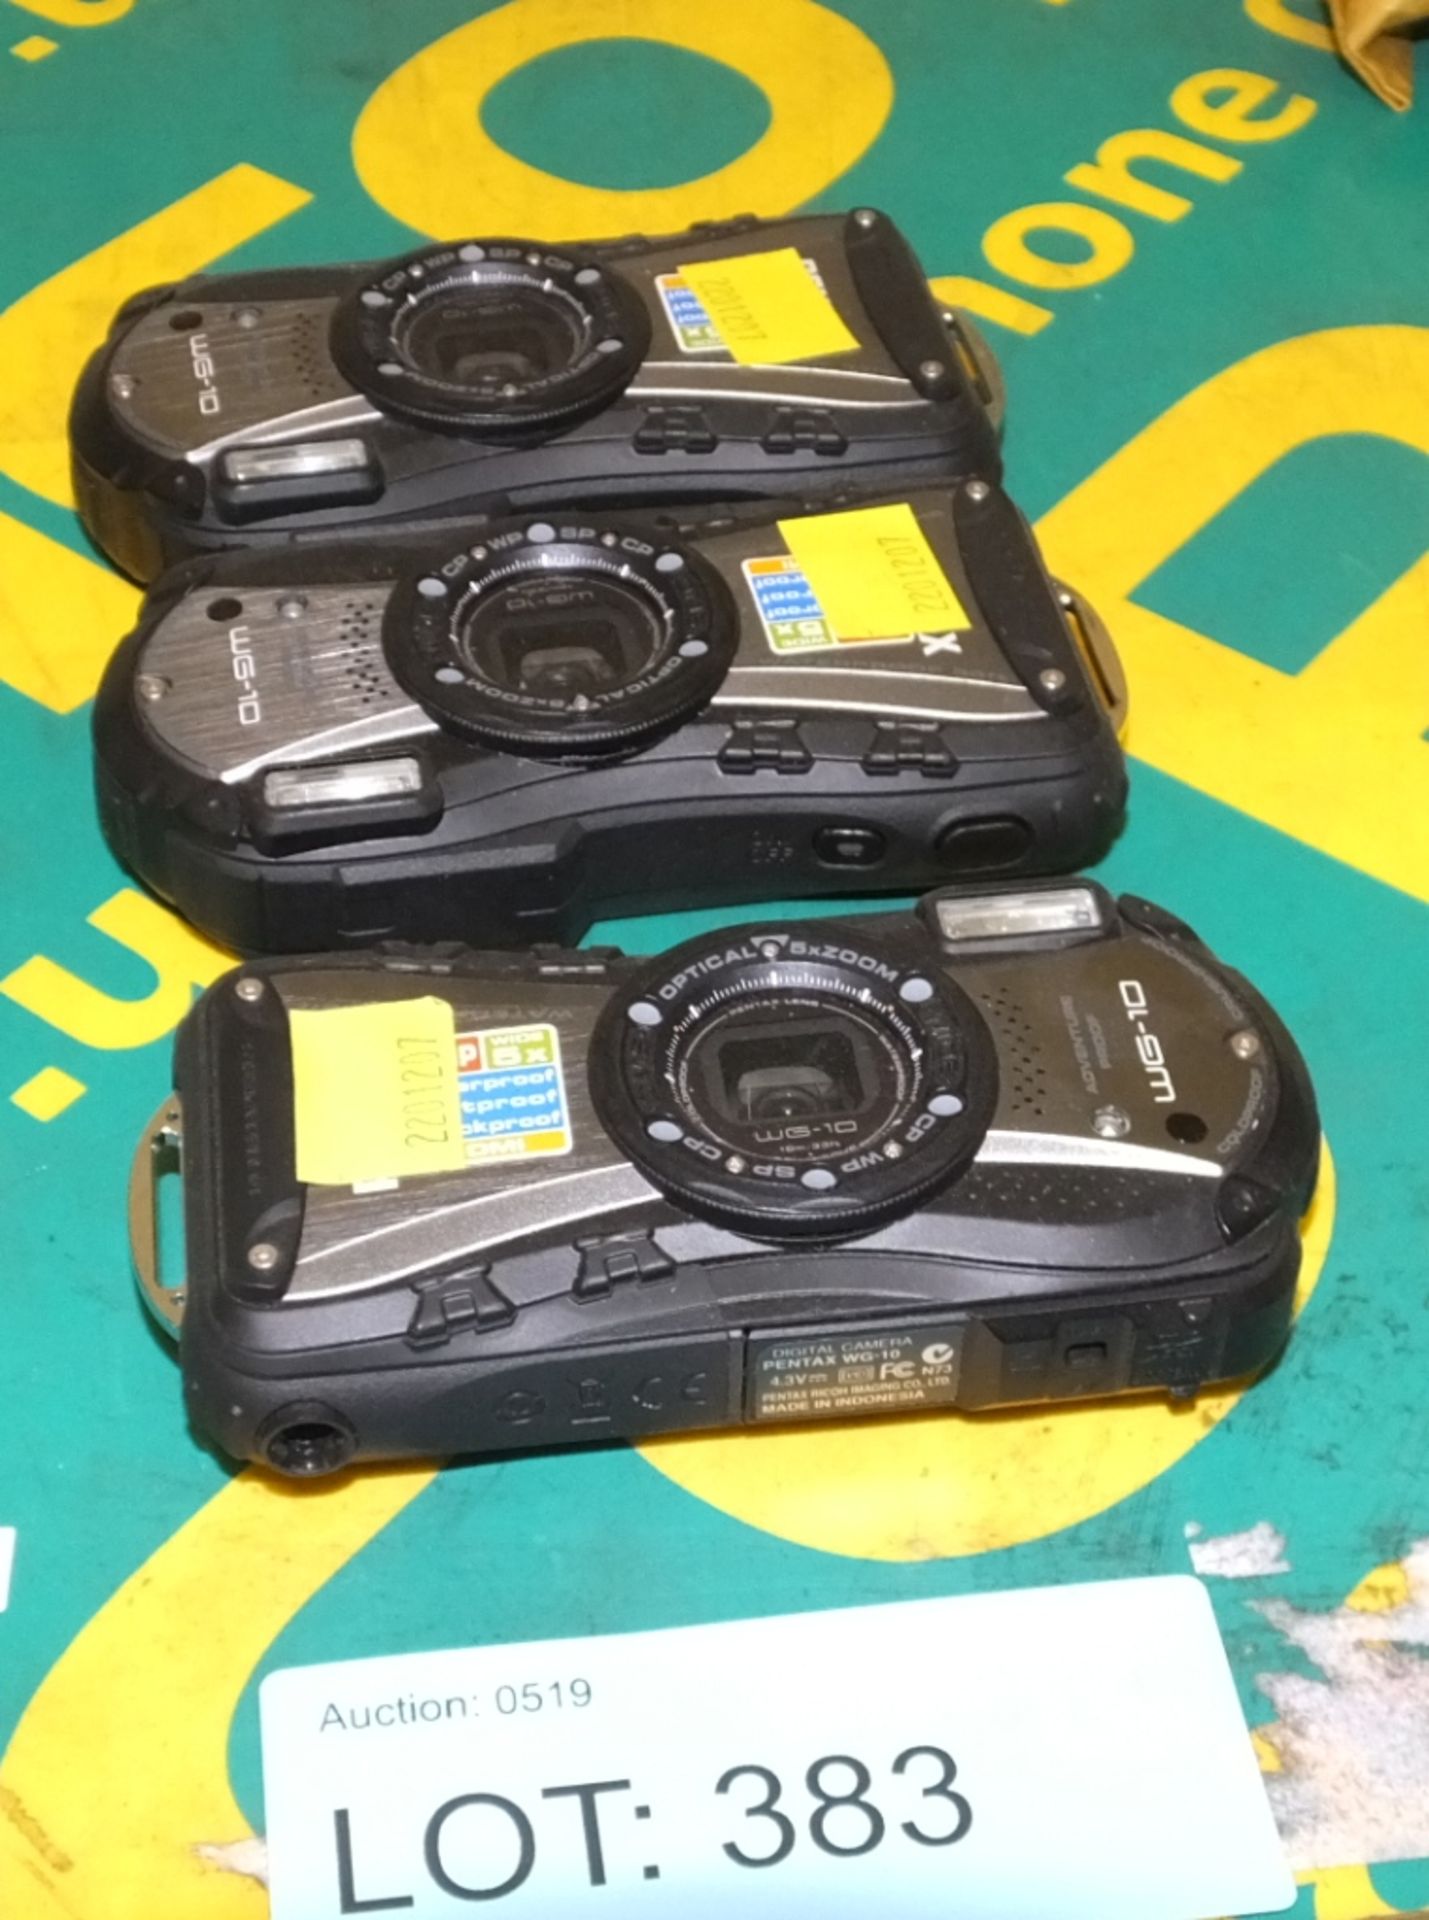 3x Pentax WG - 10 Digital Cameras